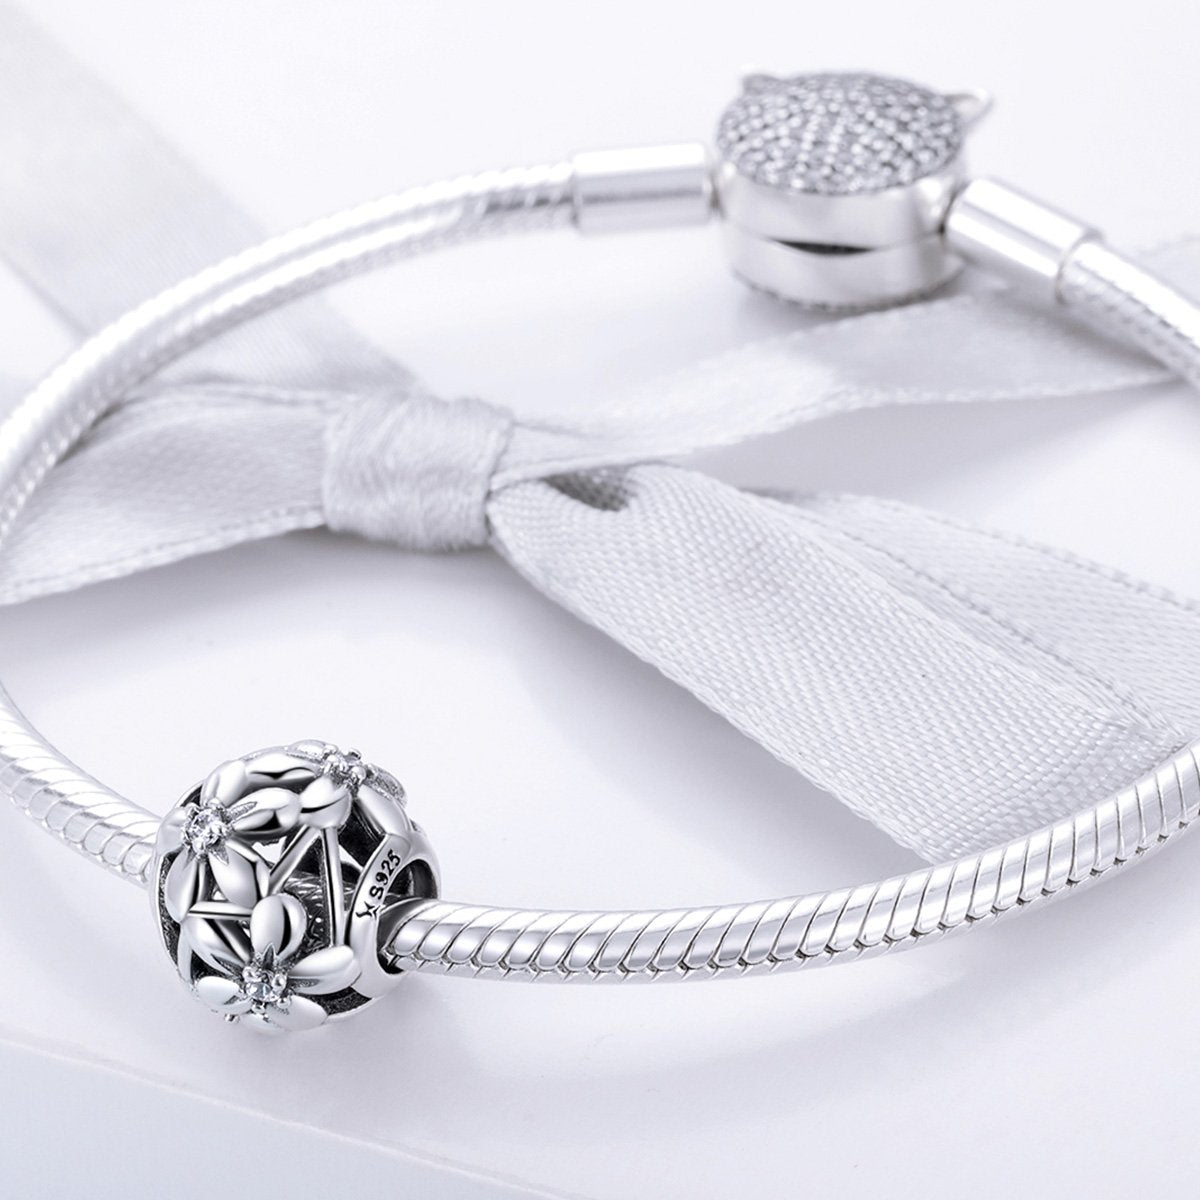 Sterling 925 silver charm the flower planet fits Pandora charm and European charm bracelet Xaxe.com